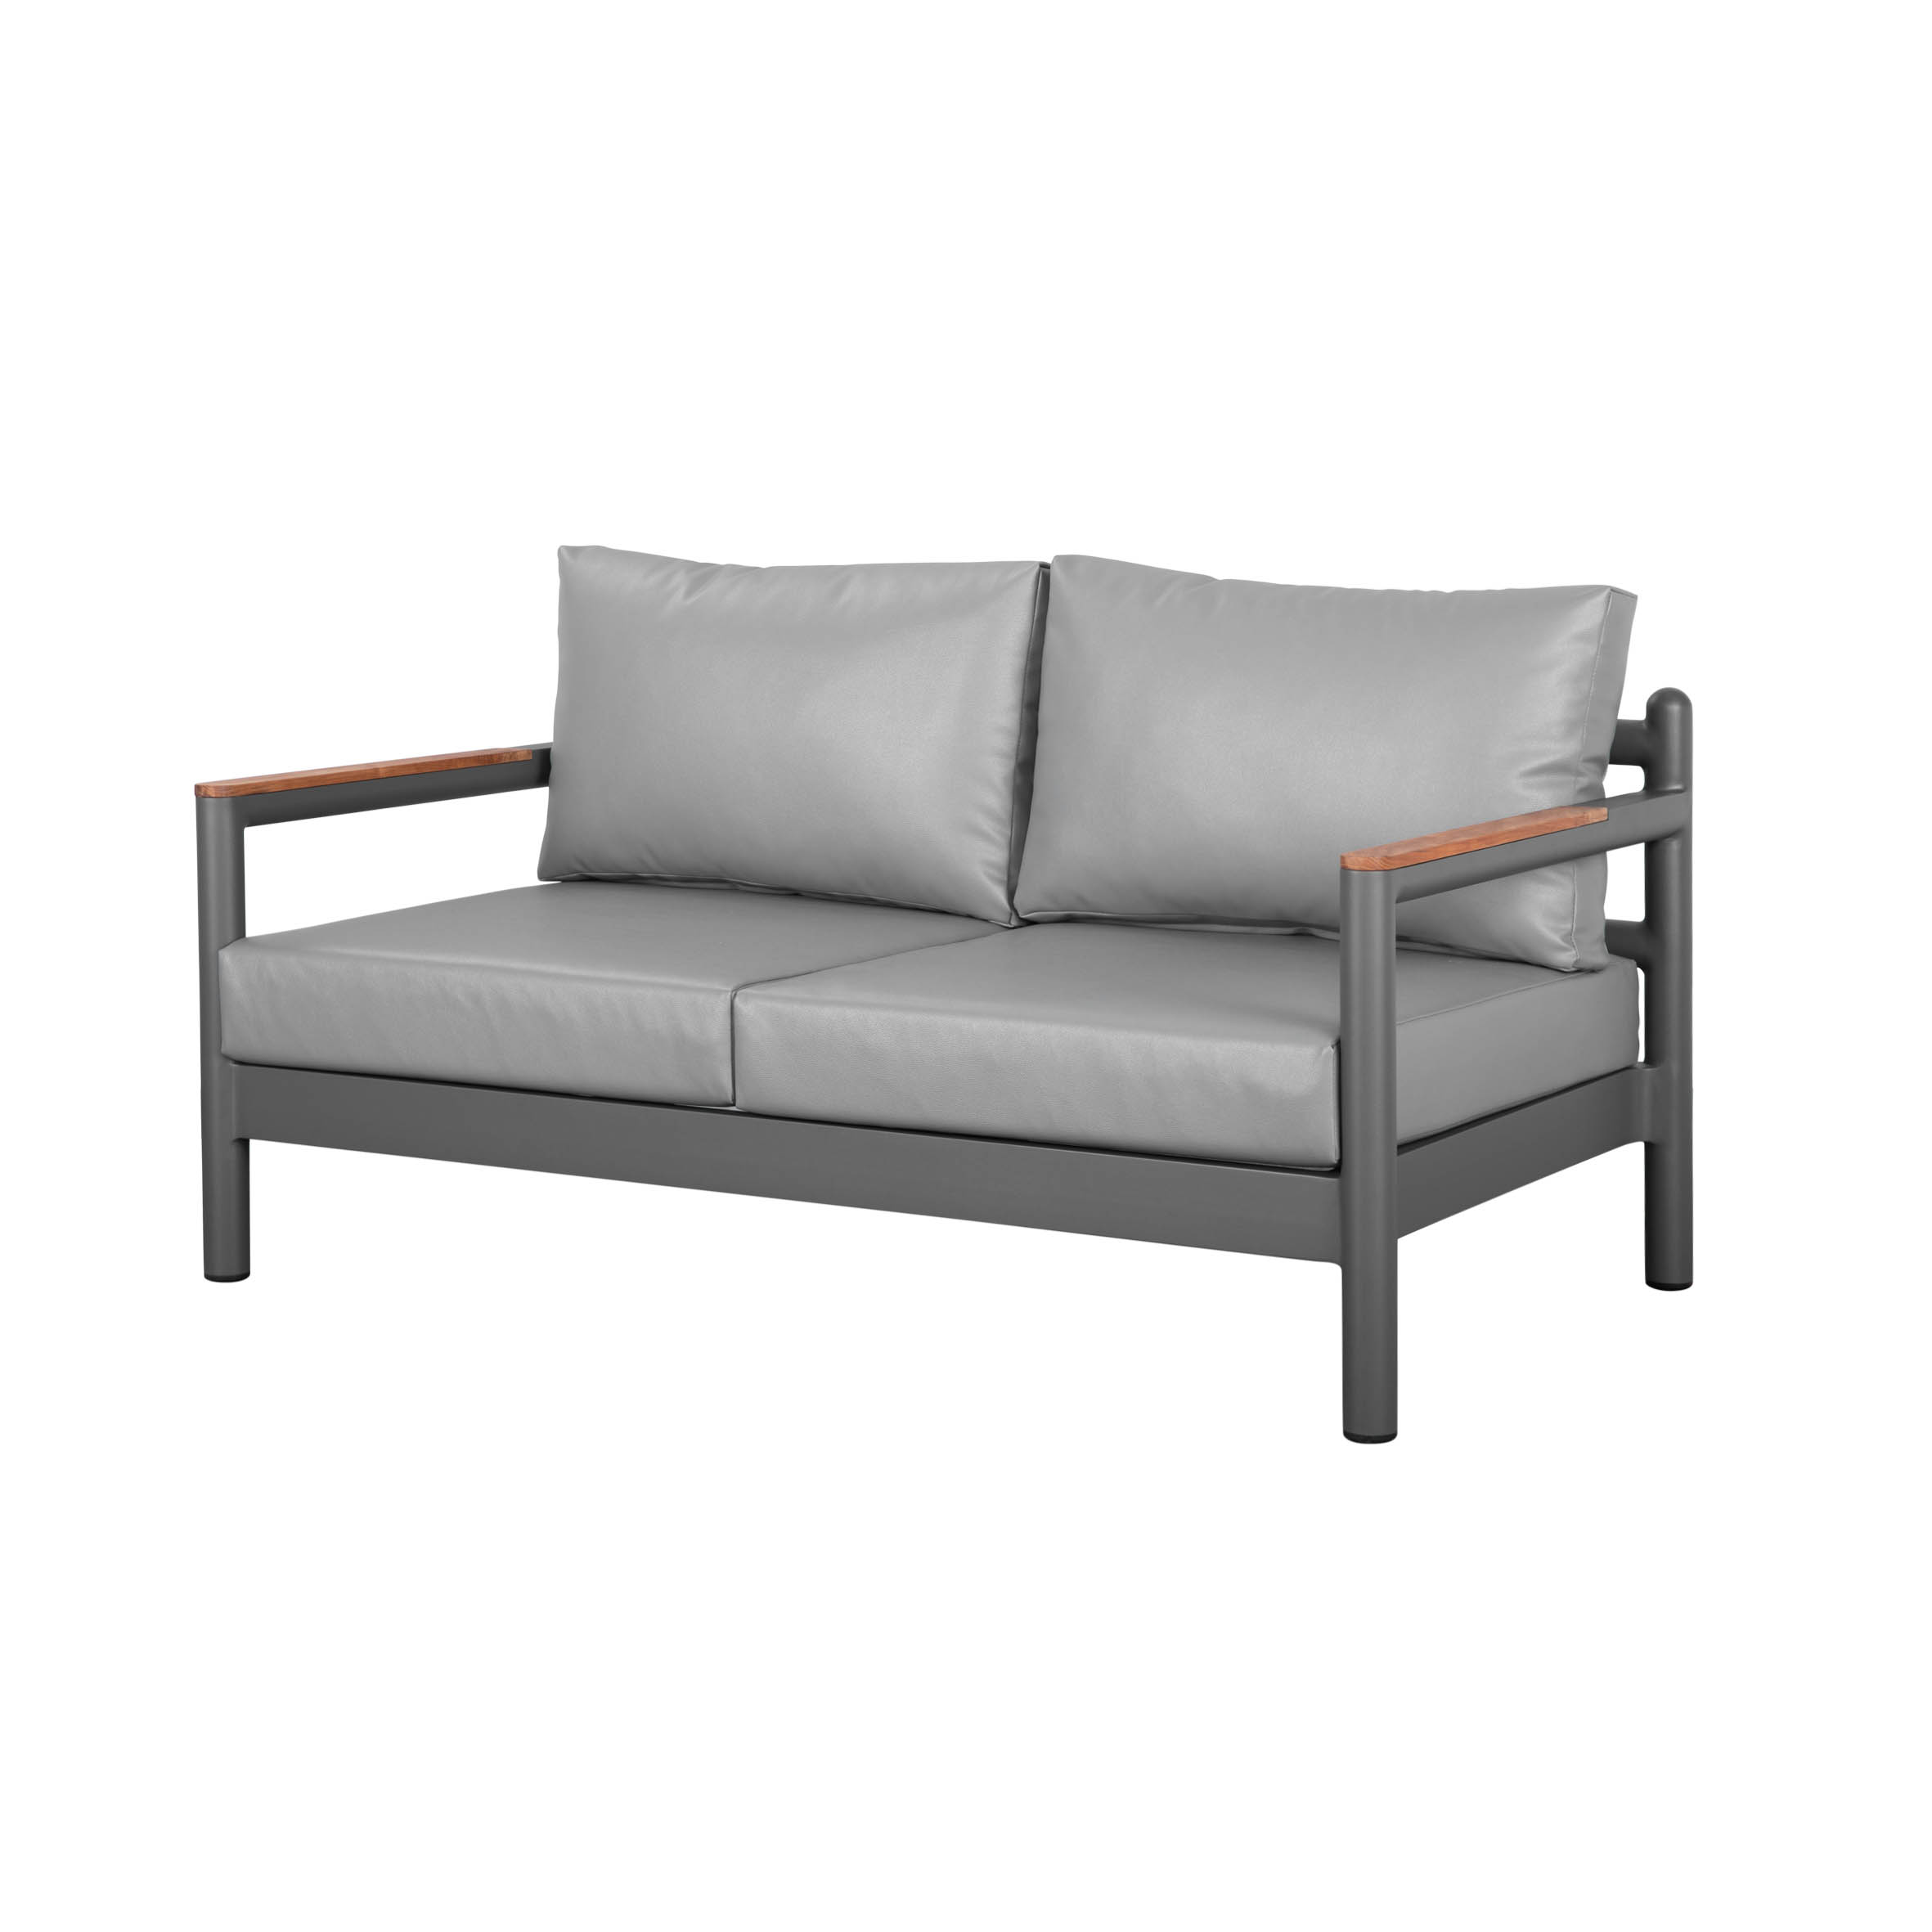 Armani alu. 2-seat sofa(Teak armrest) Featured Image